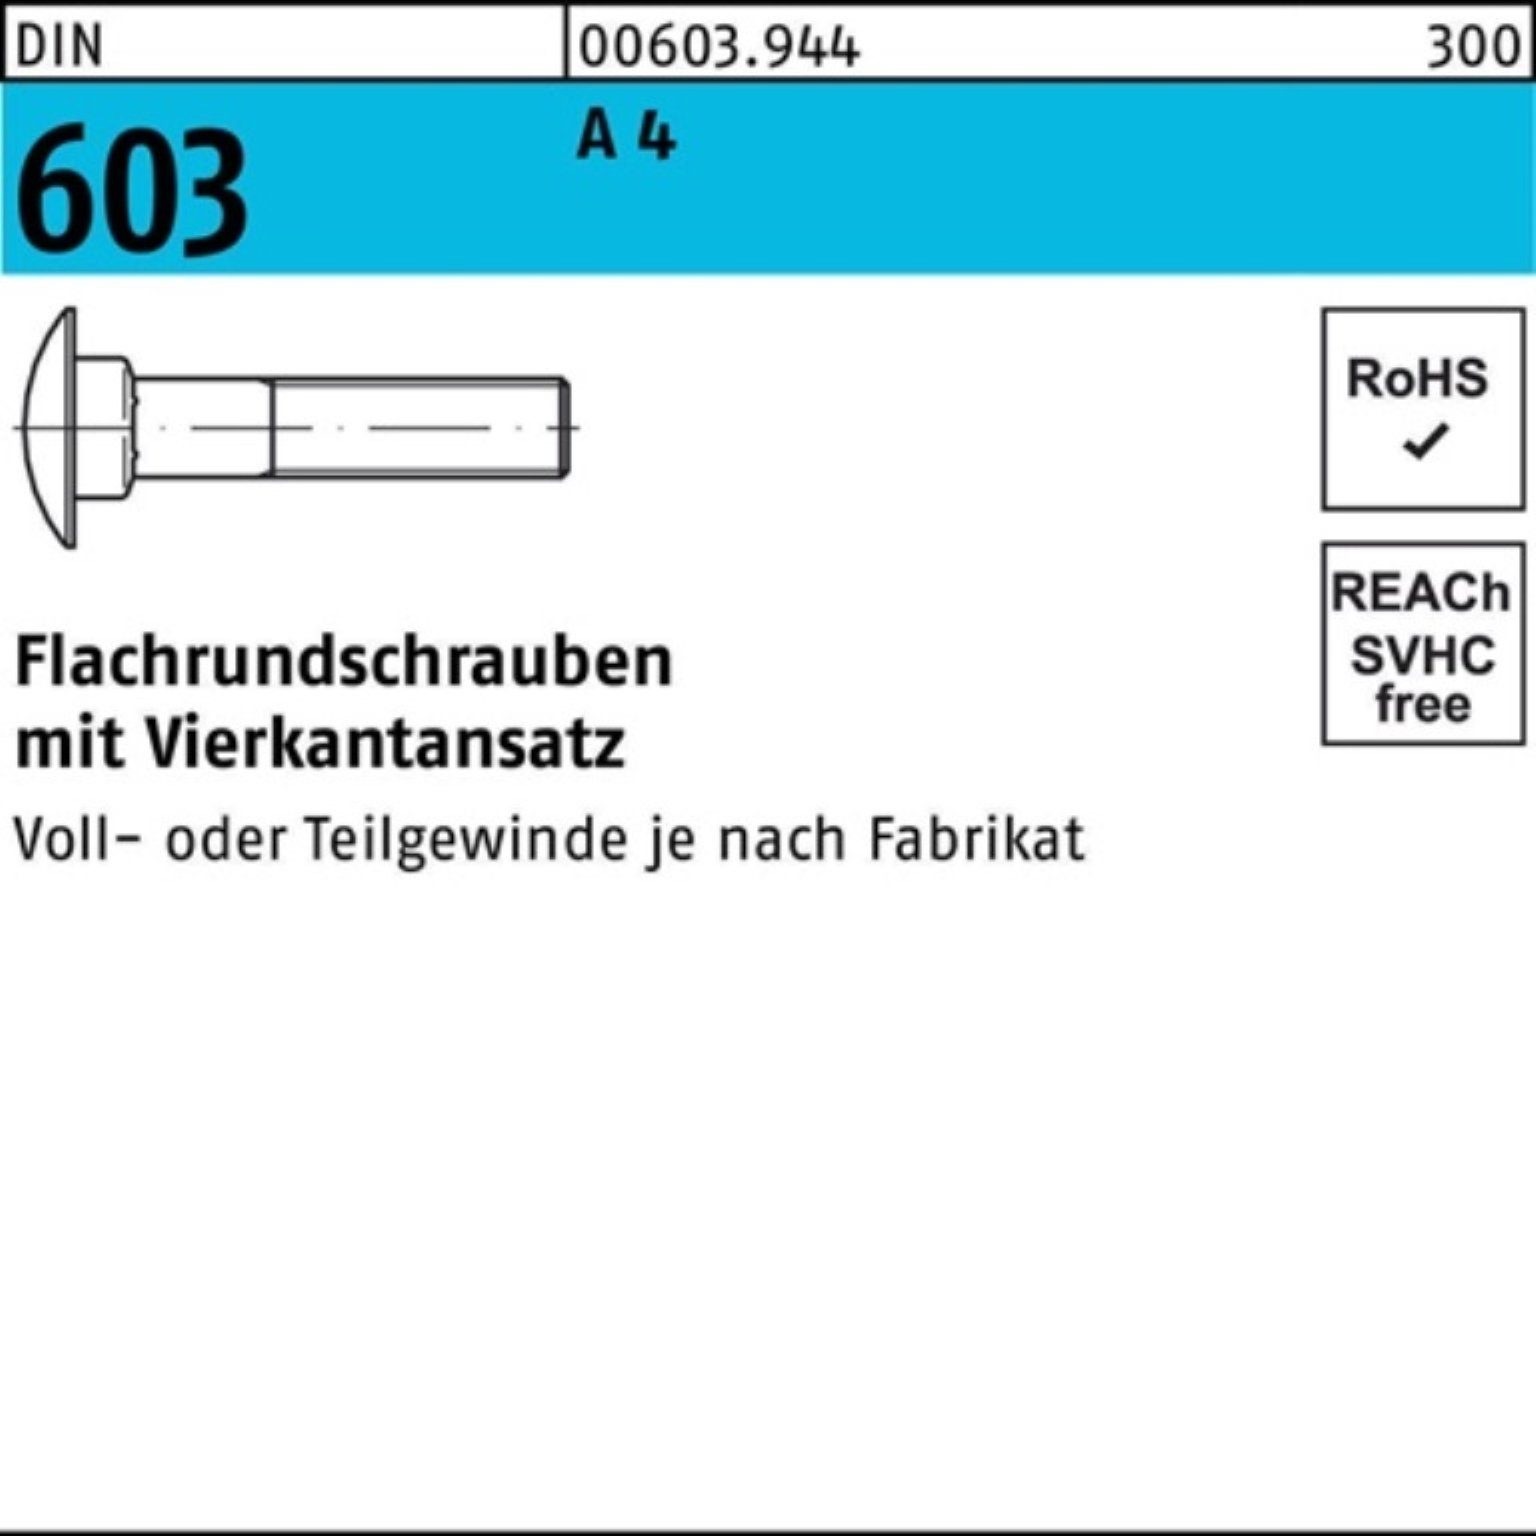 Reyher Schraube 100er 603 M12x DIN A 4 Vierkantansatz Flachrundschraube Pack St 120 1